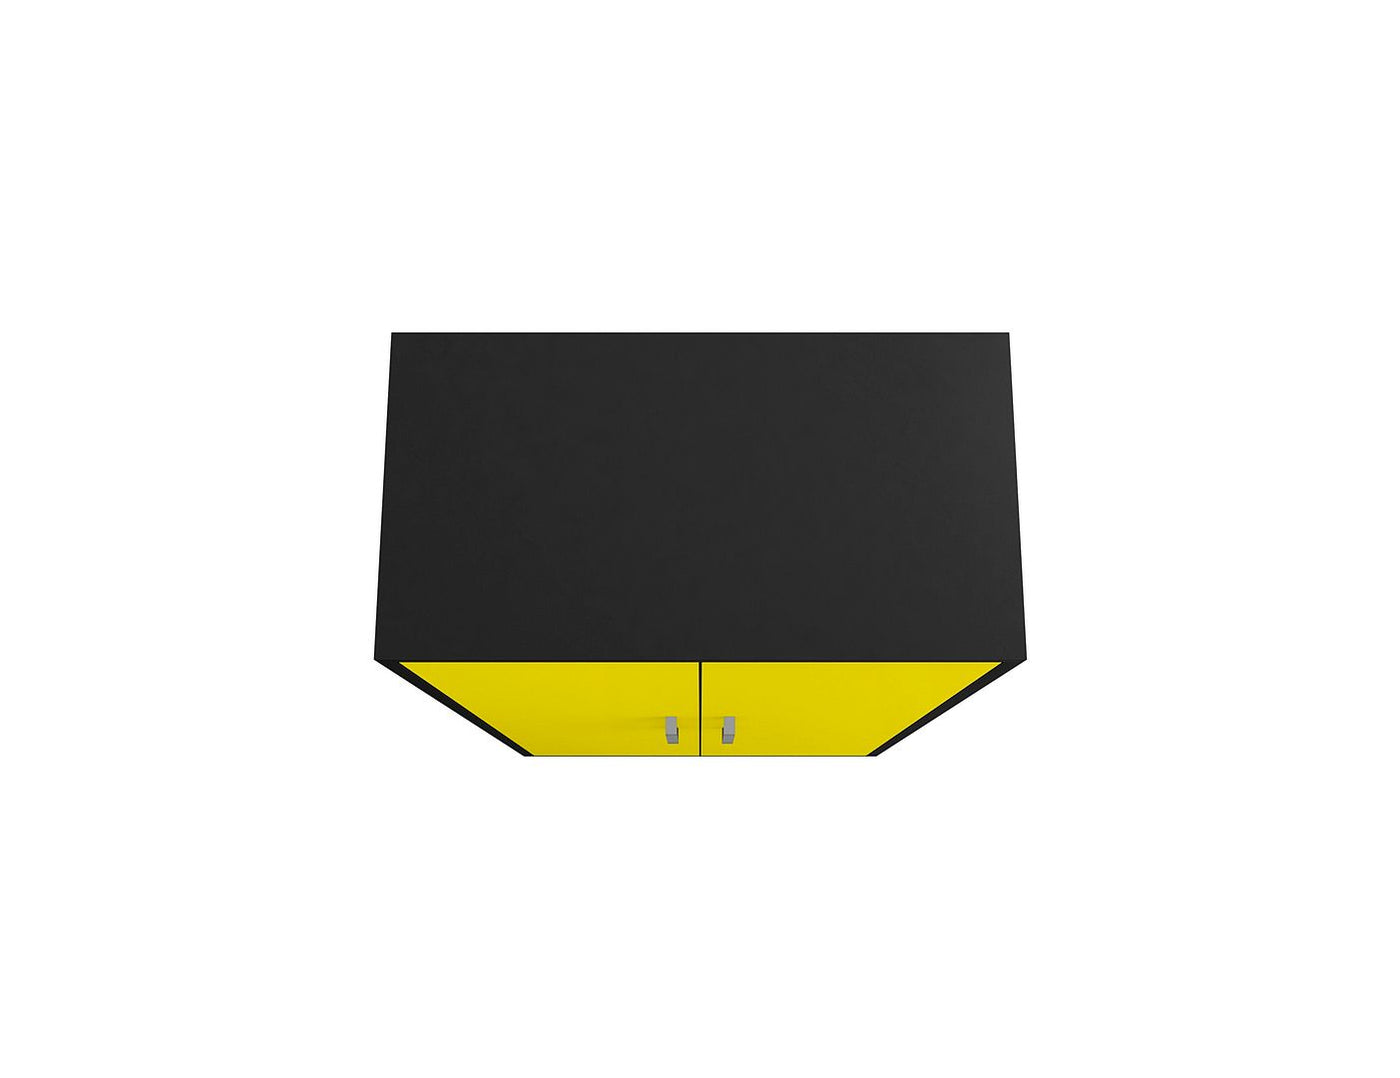 Lunde Storage Cabinet - Matte Black/Yellow - Set of 2